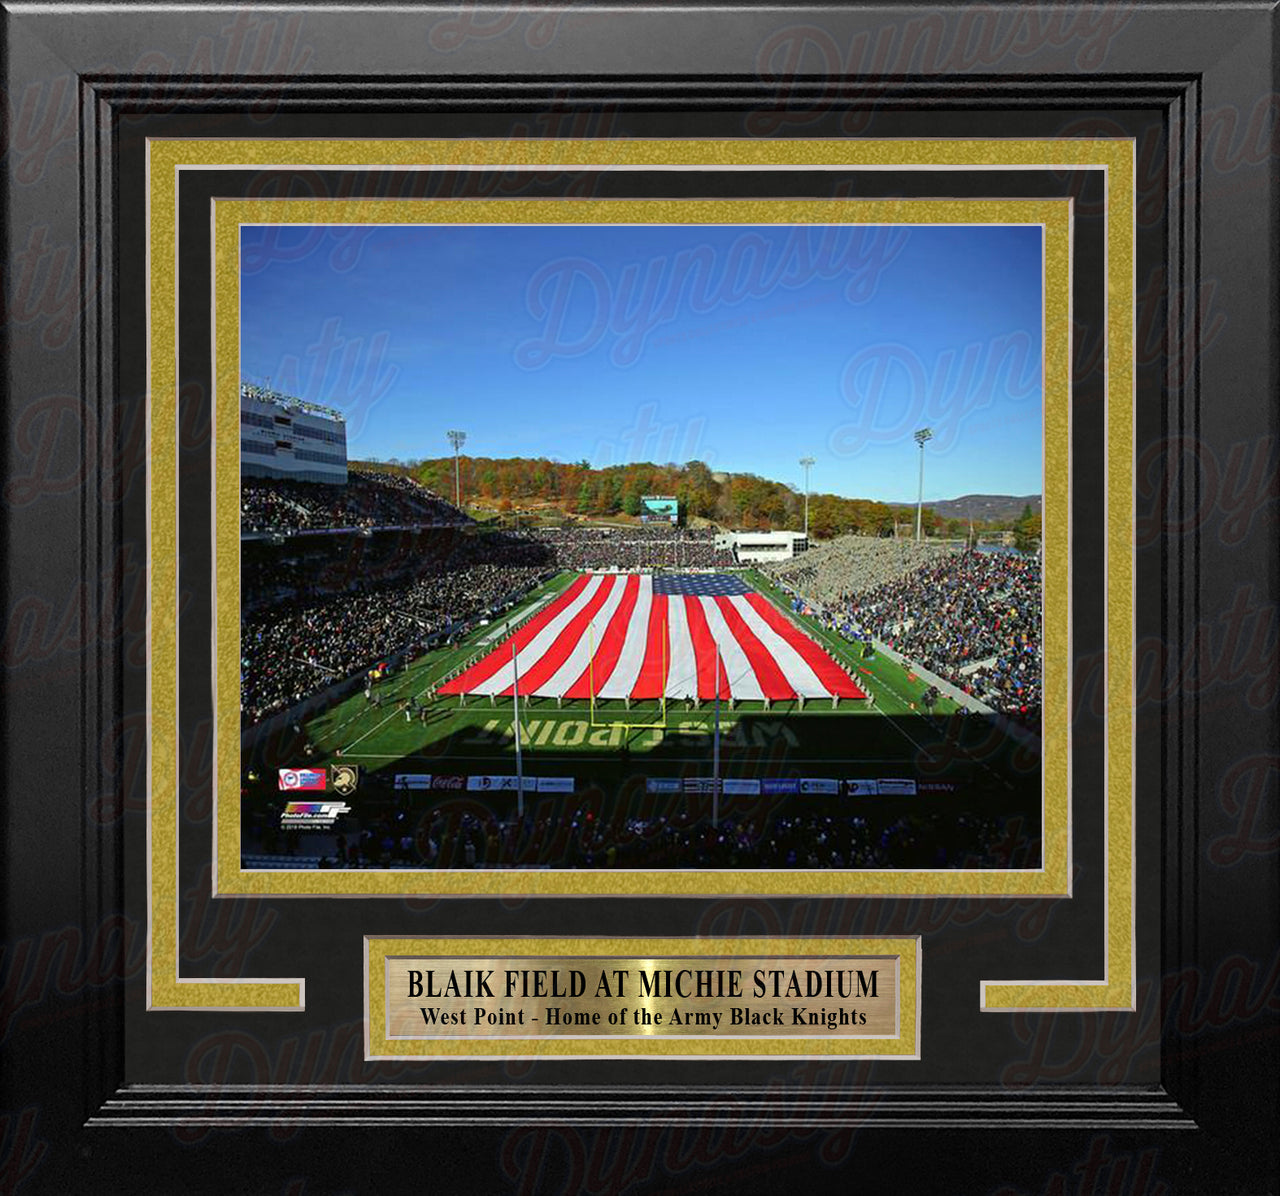 Army Black Knights Blaik Field at Michie Stadium College Football 8" x 10" Framed Photo - Dynasty Sports & Framing 